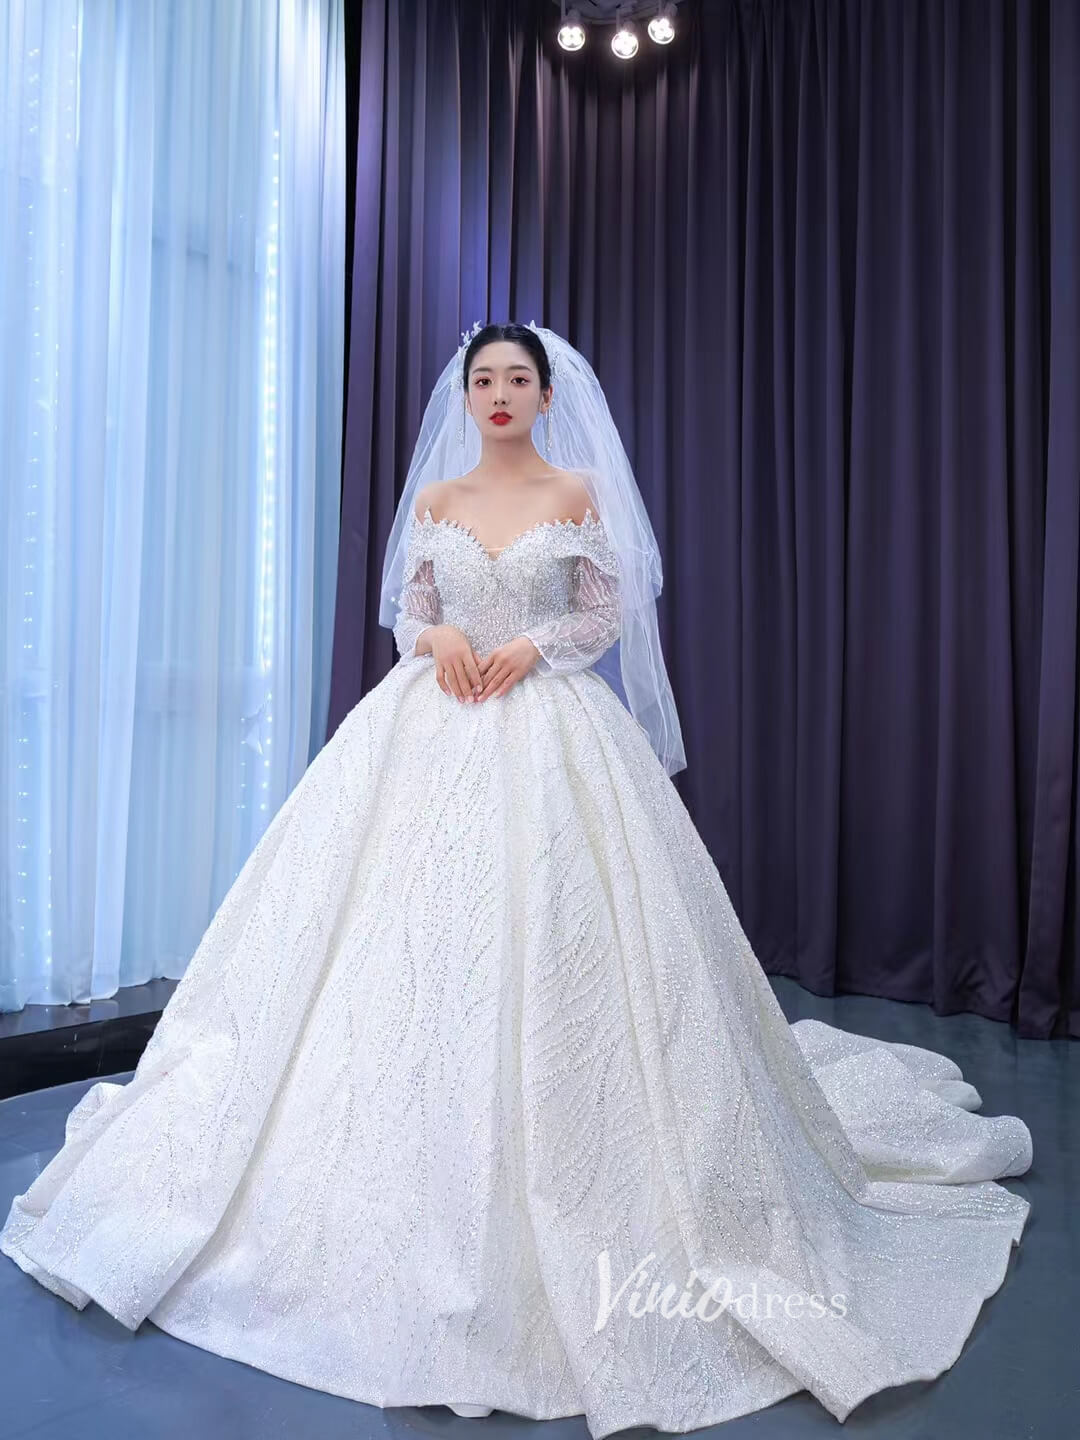 Luxury Beaded Ball Gown Wedding Dresses with Sleeves 67564-wedding dresses-Viniodress-Ivory-Custom Size-Viniodress